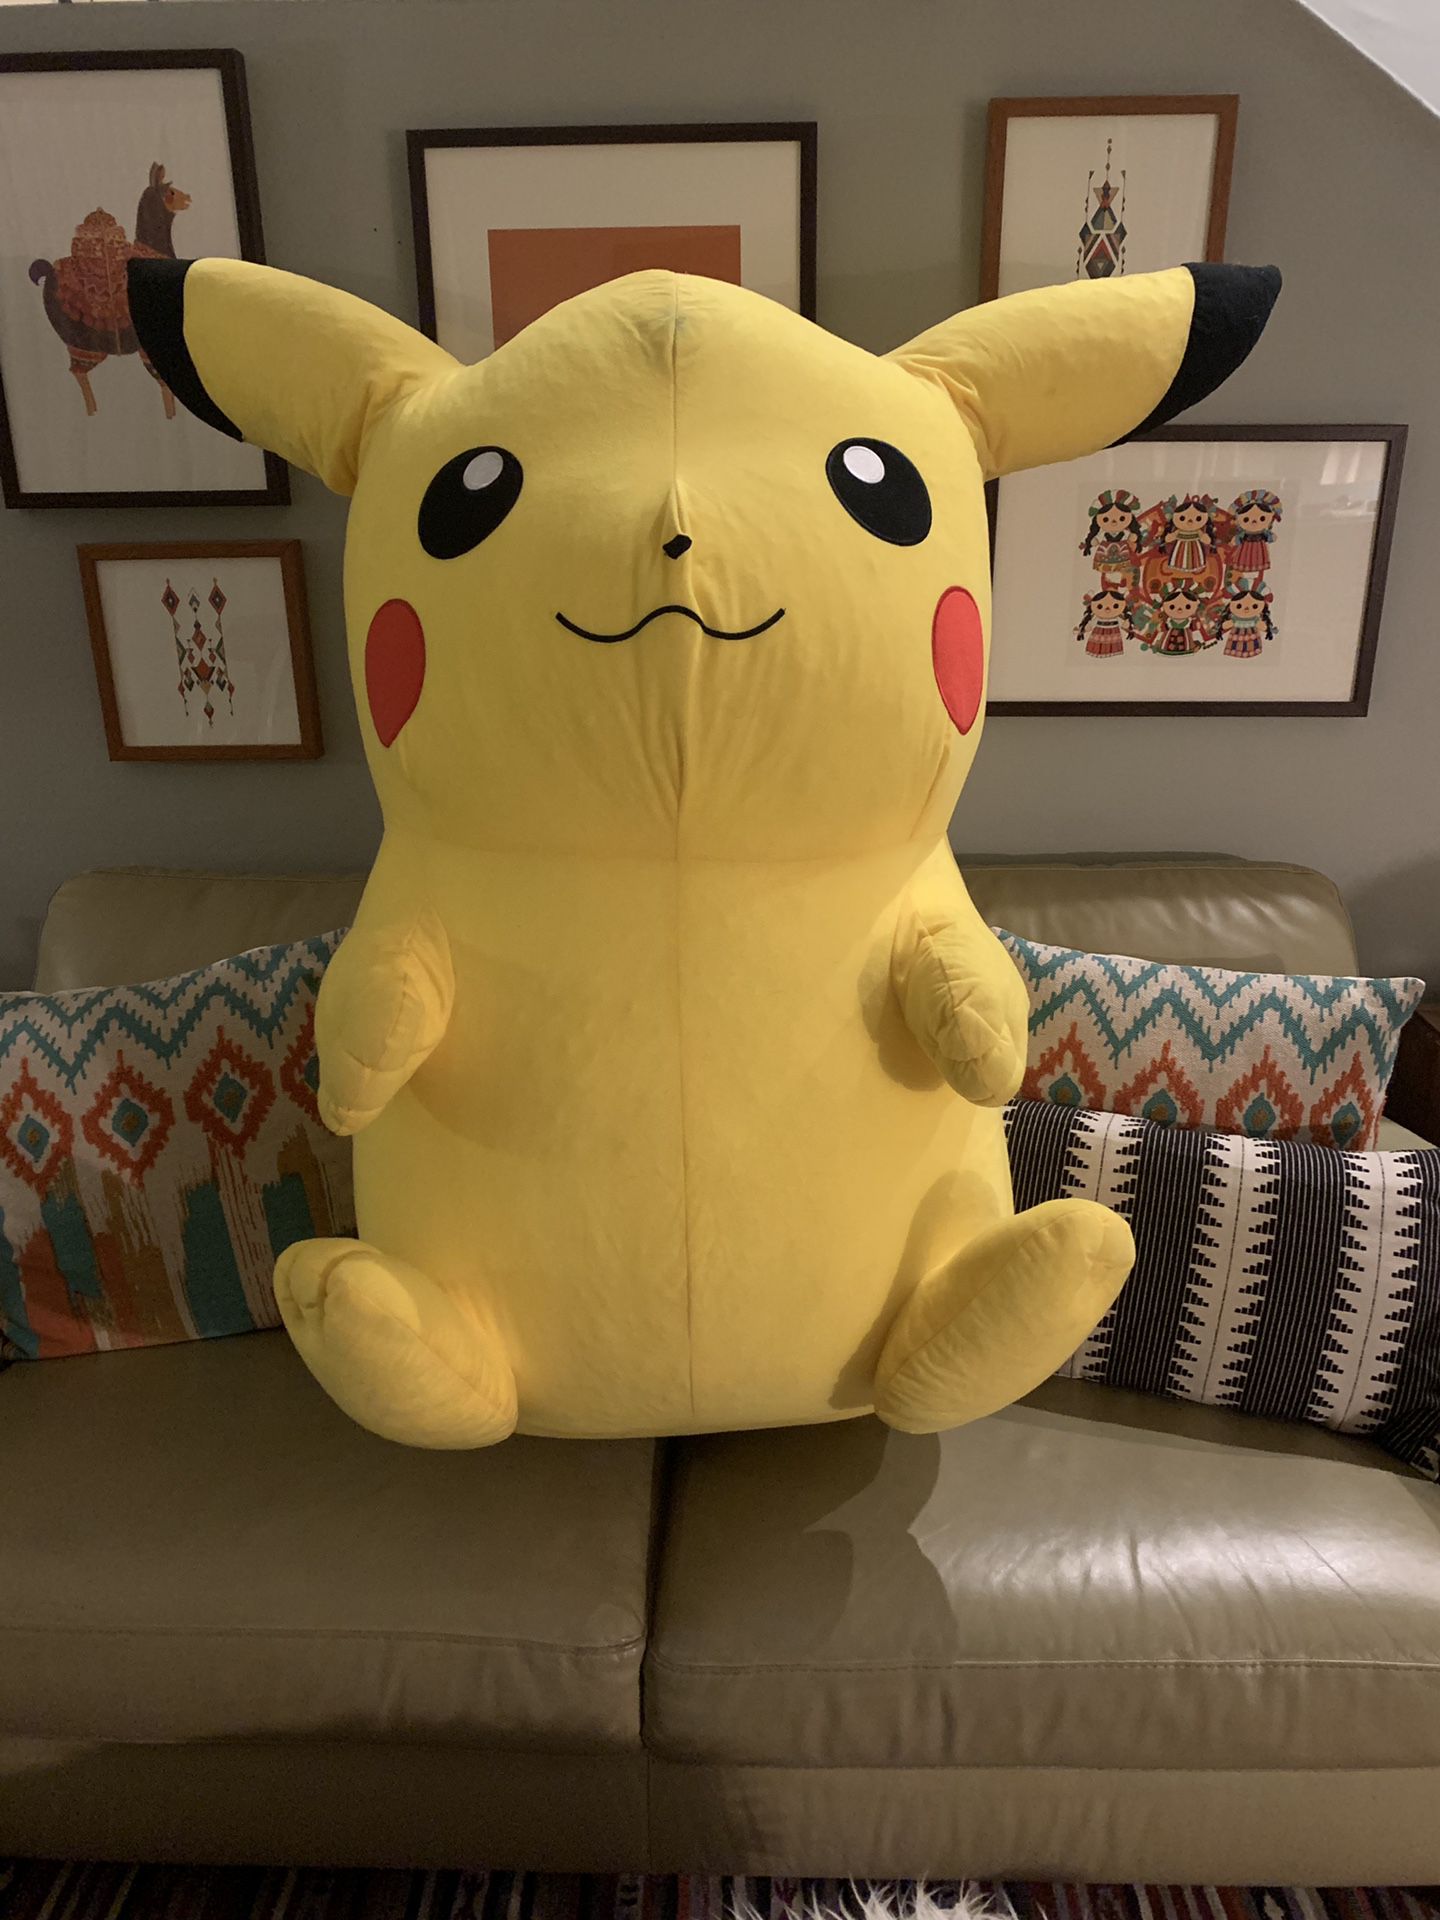 *UPDATE* Giant stuffed Pikachu